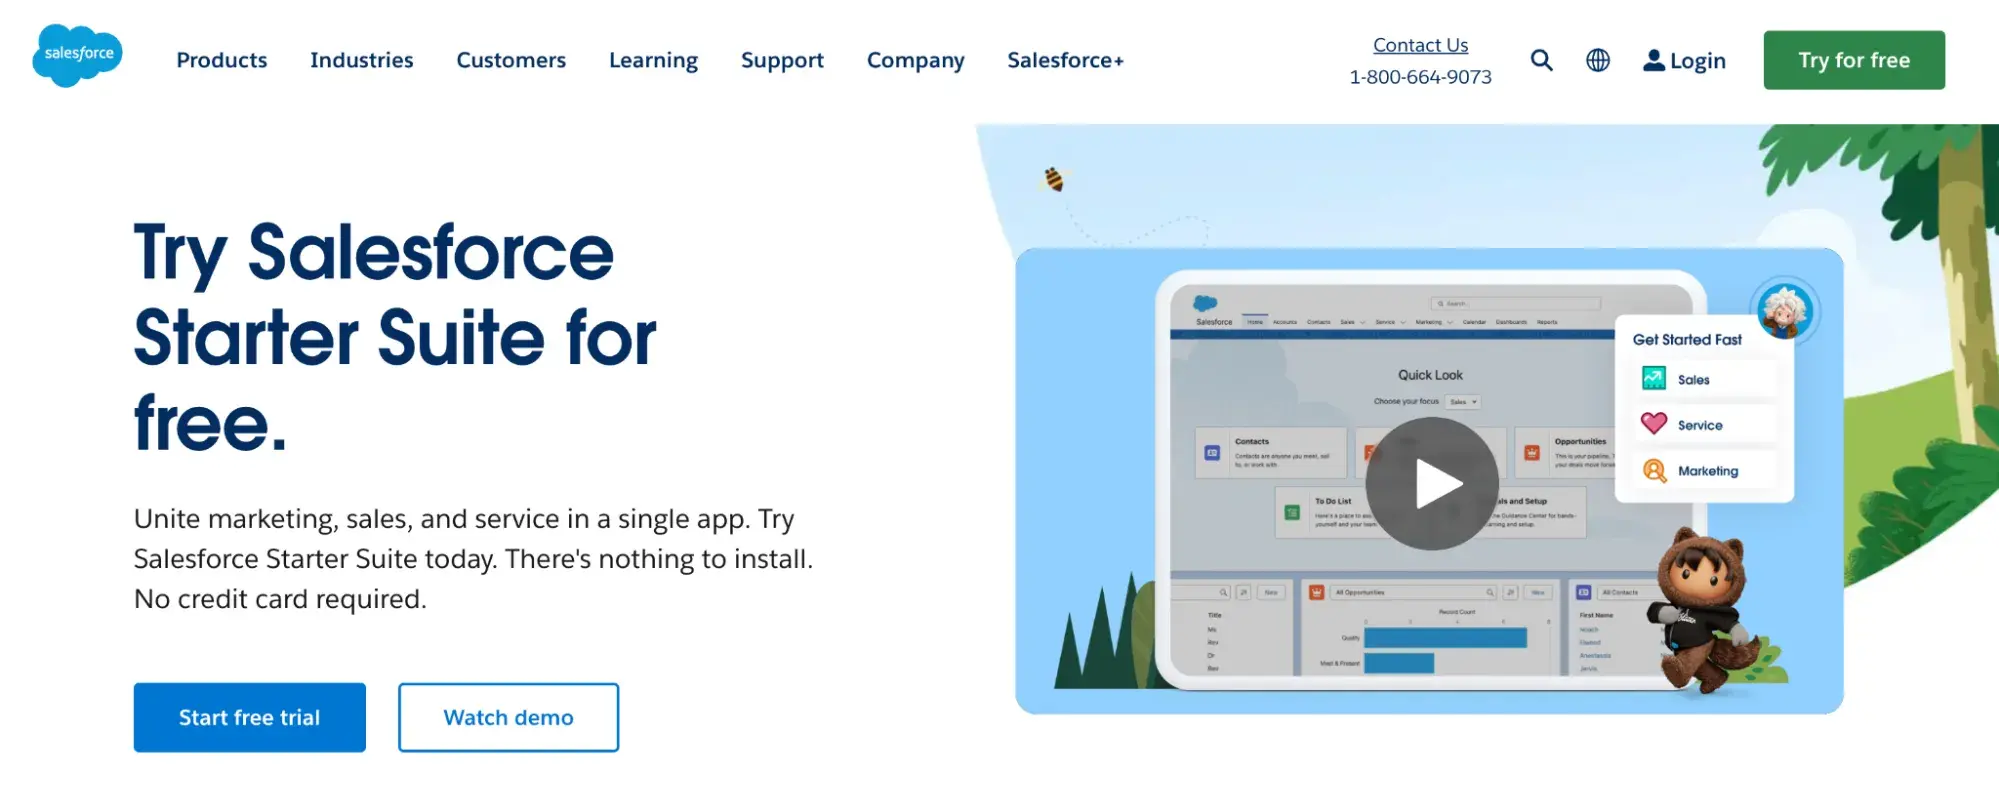 CRM example screenshot of salesforce homepage